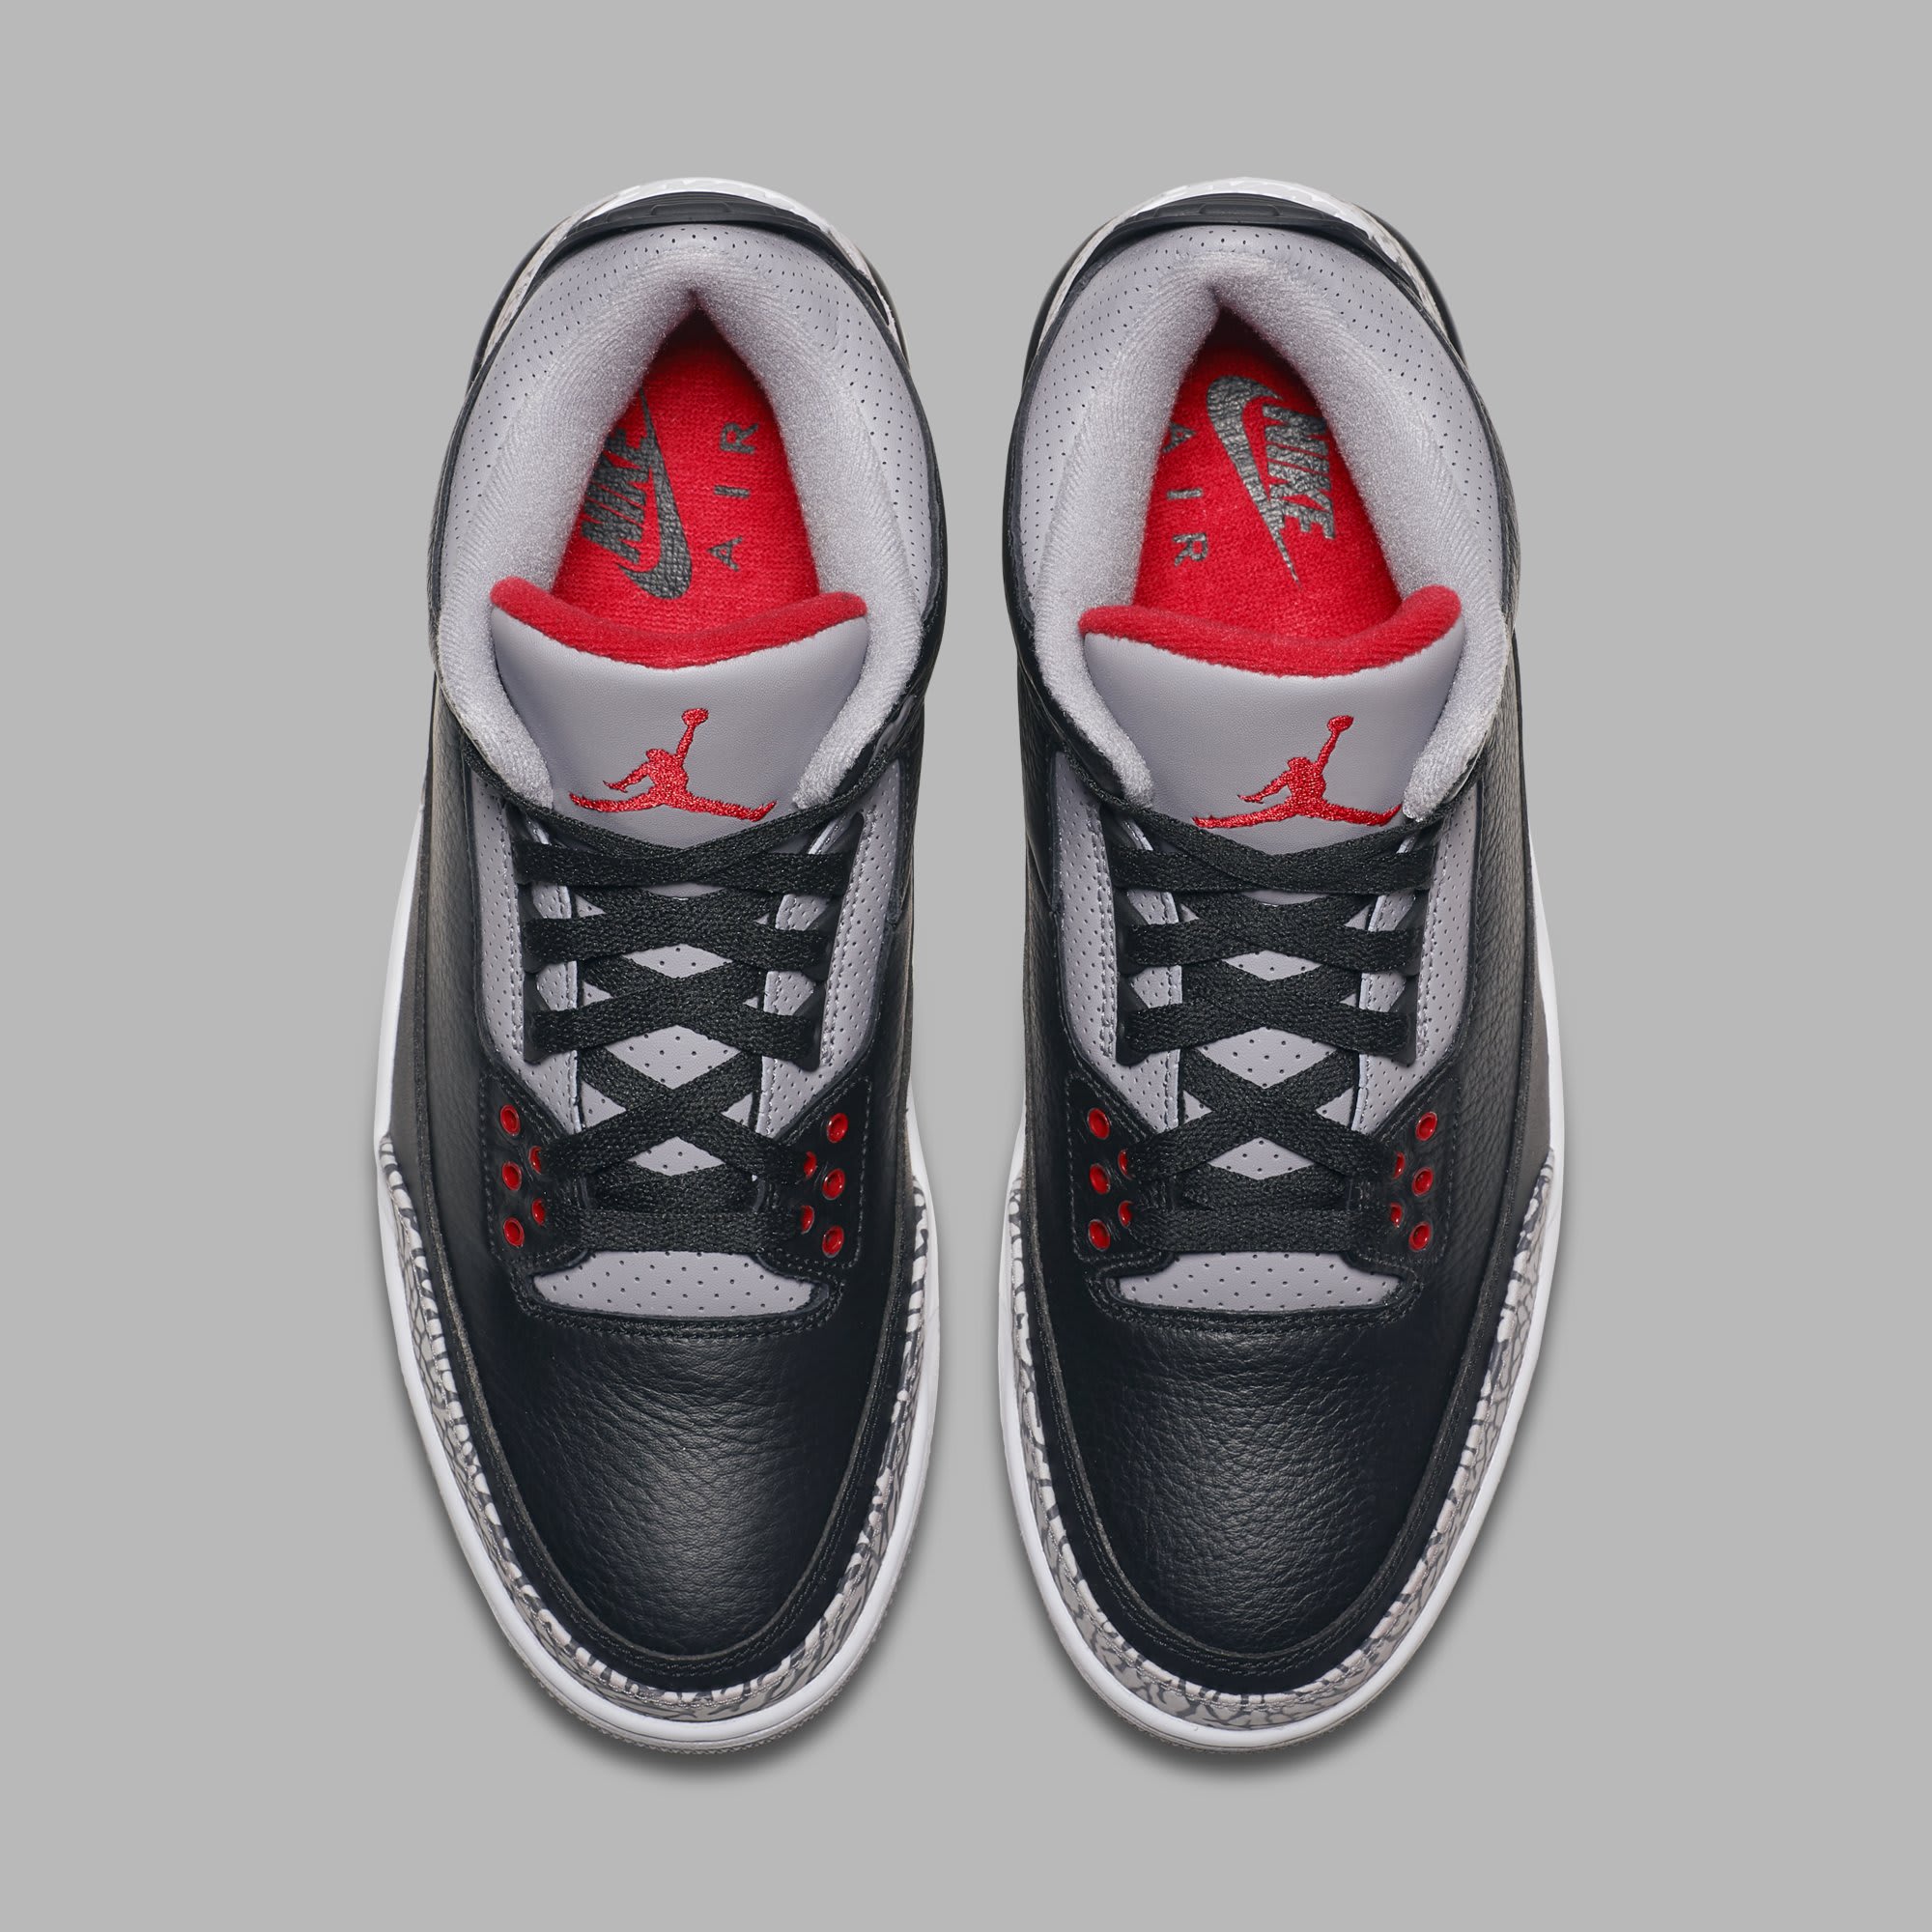 Air Jordan 3 Black/Cement Grey-White-Fire Red 854262-001 (Top)